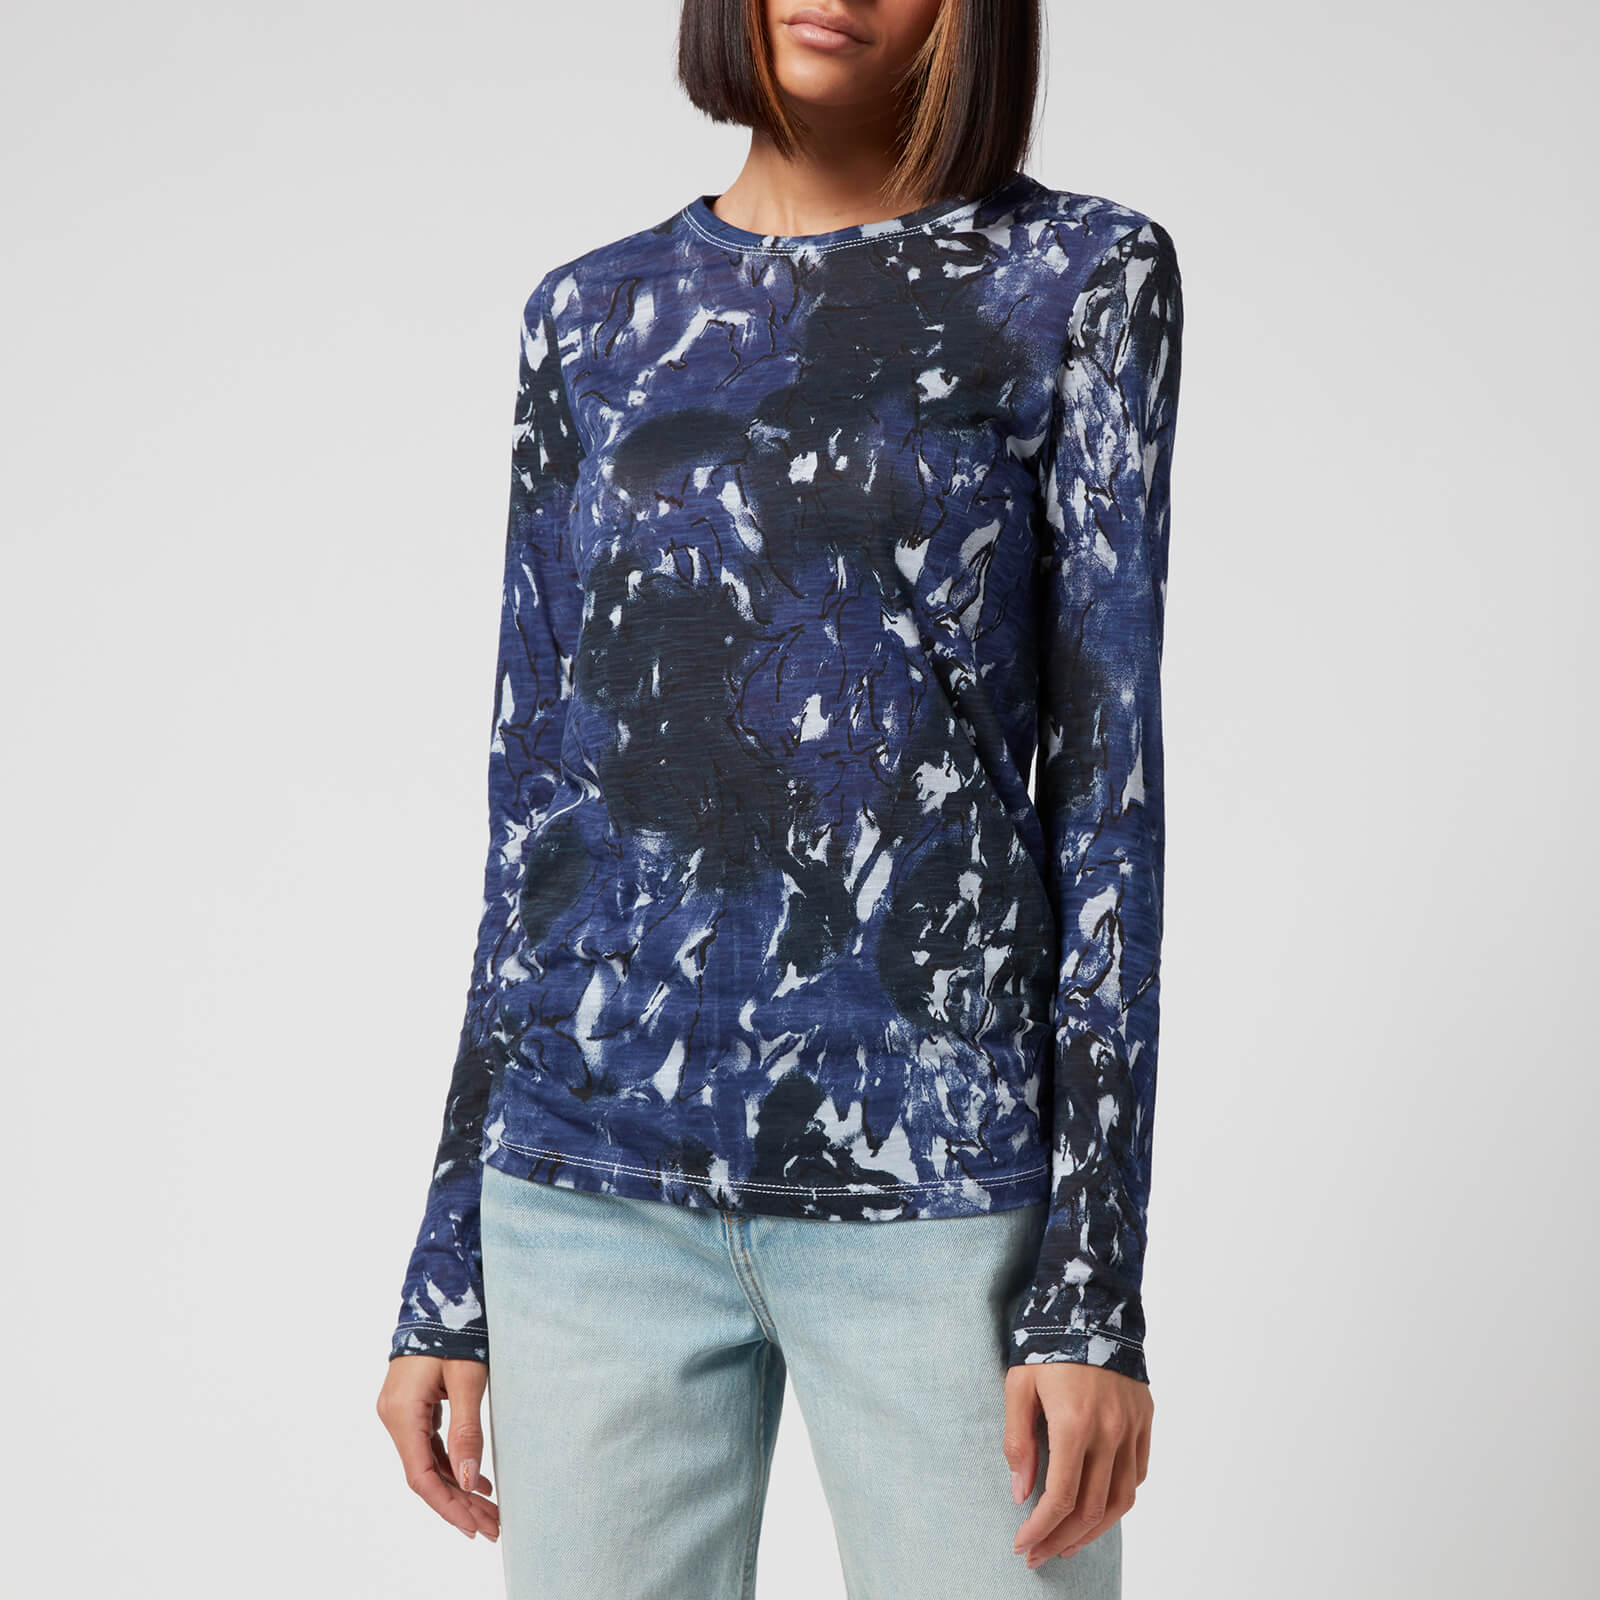 Proenza Schouler Women's Painted Floral Long Sleeve T-Shirt - Blue Multi - XS